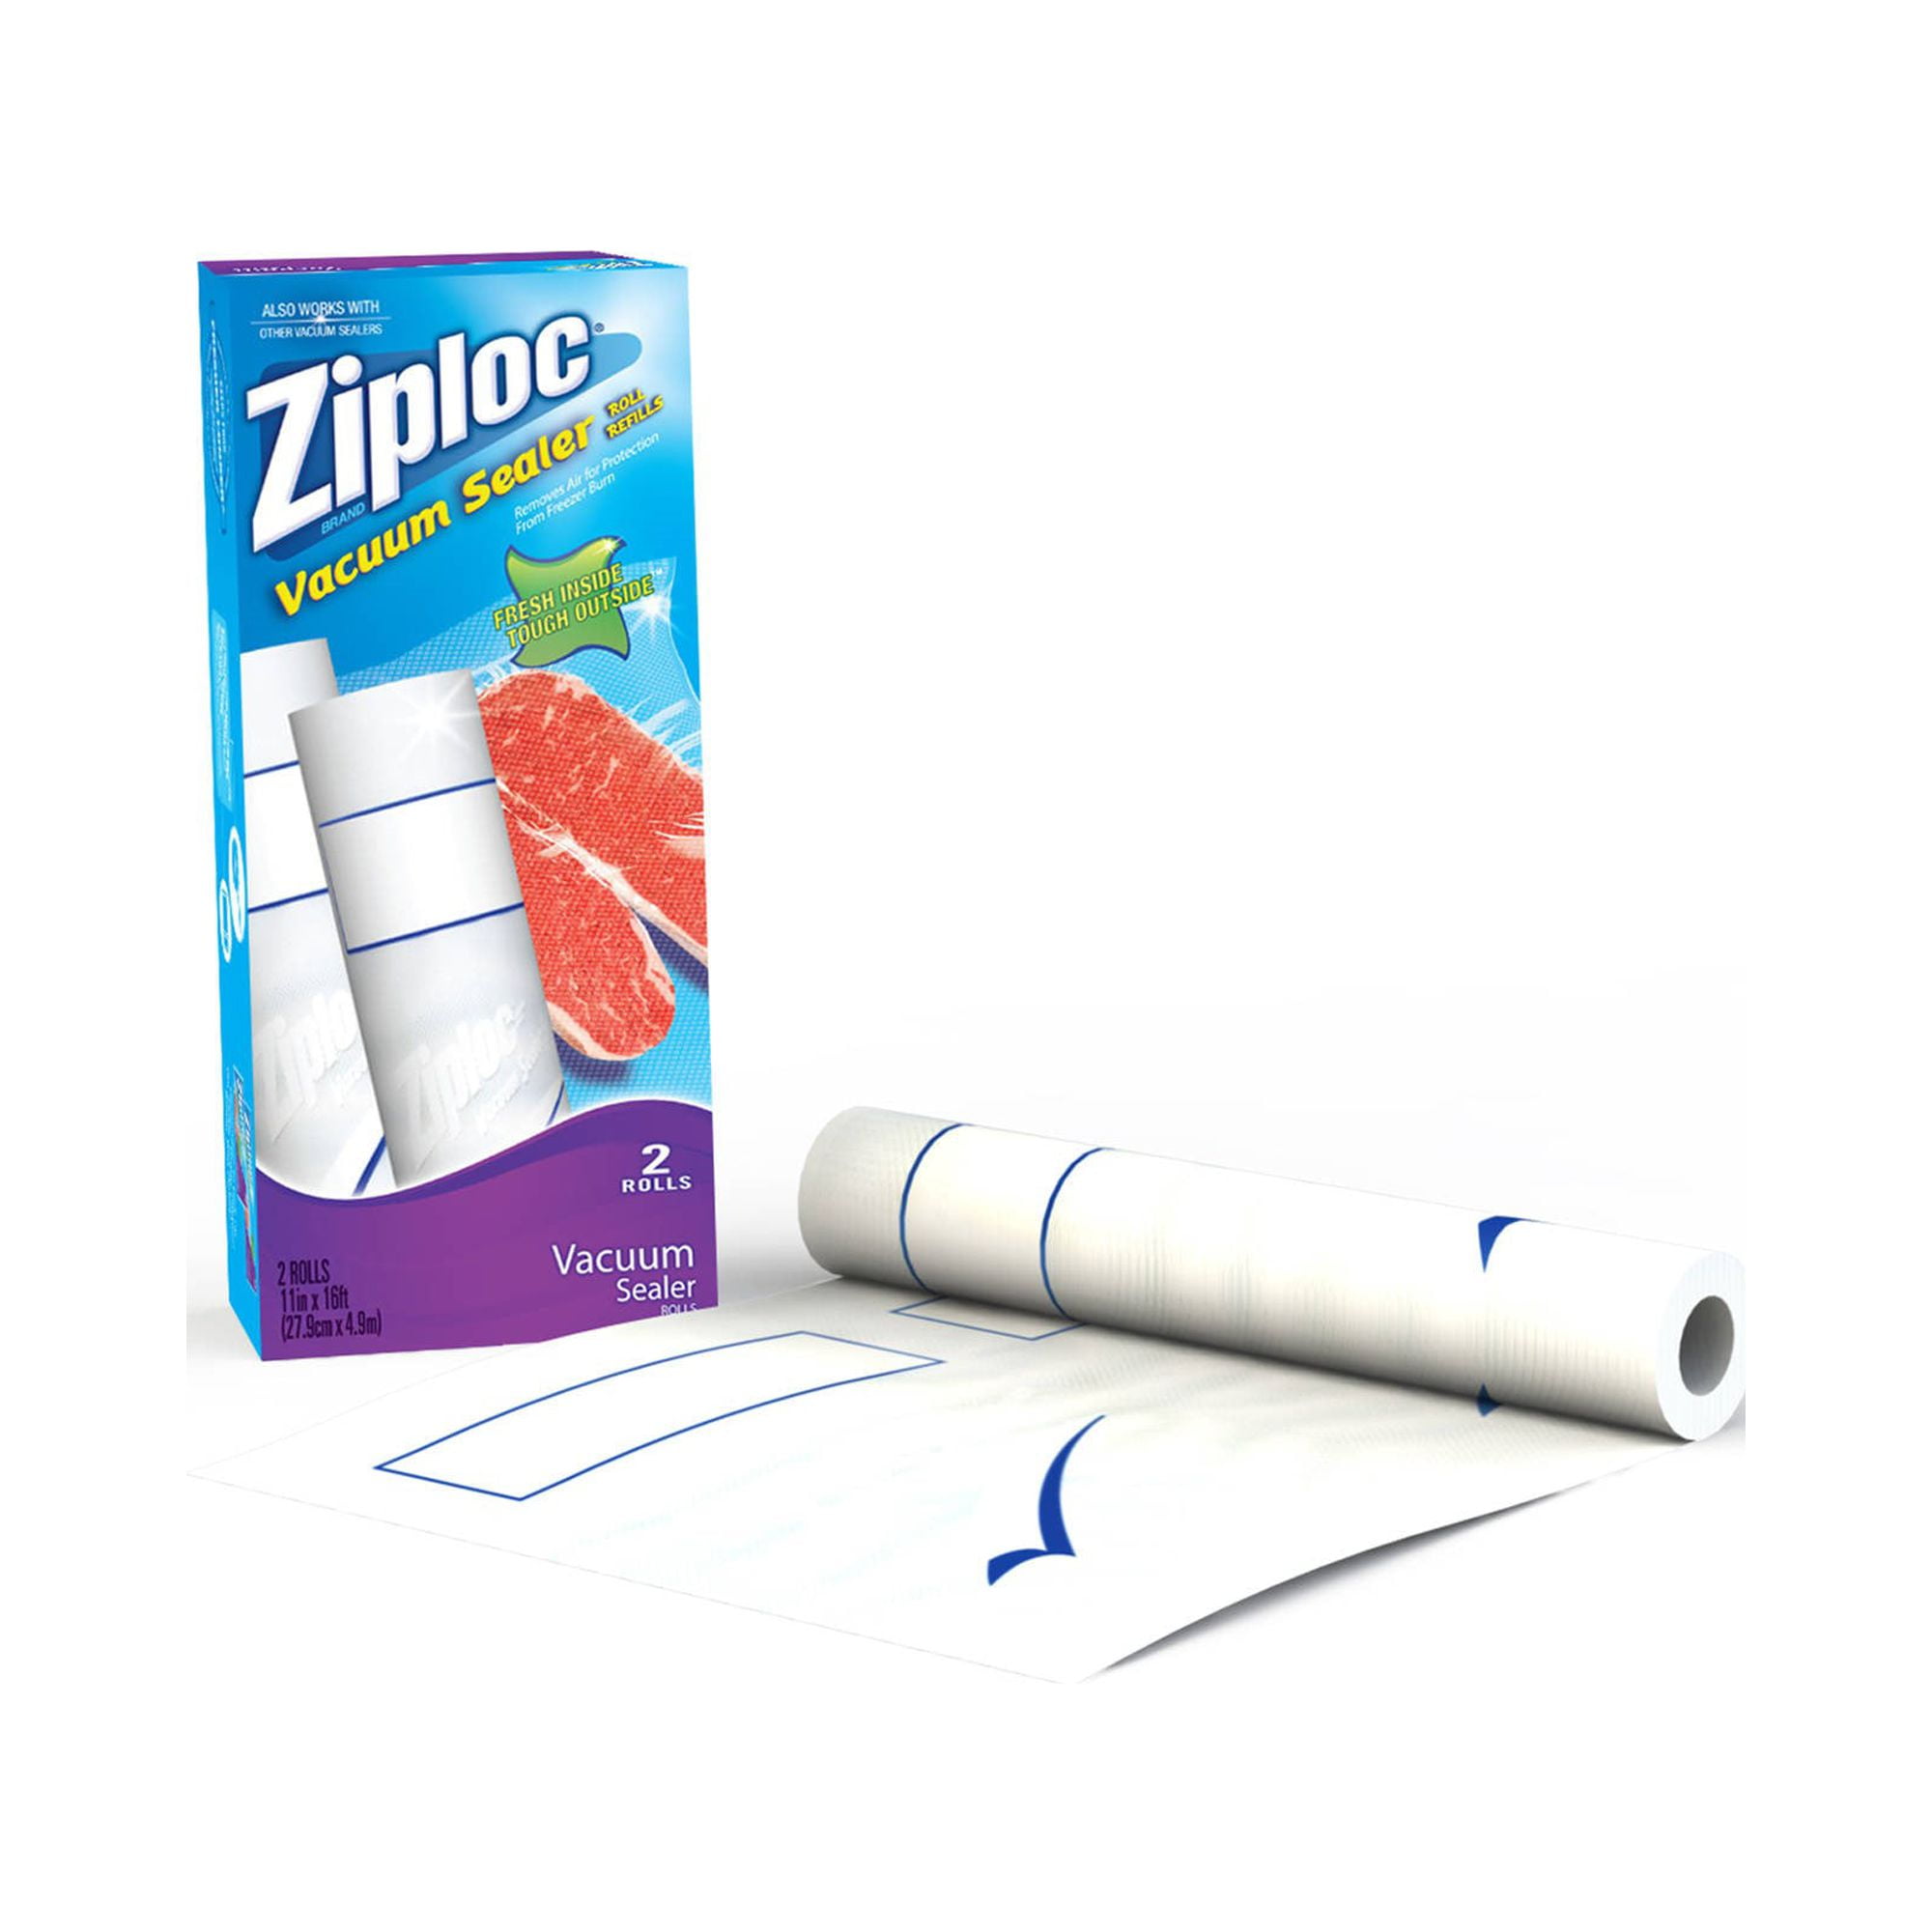 Ziploc® Brand Vacuum Sealer System Review #Sponsored